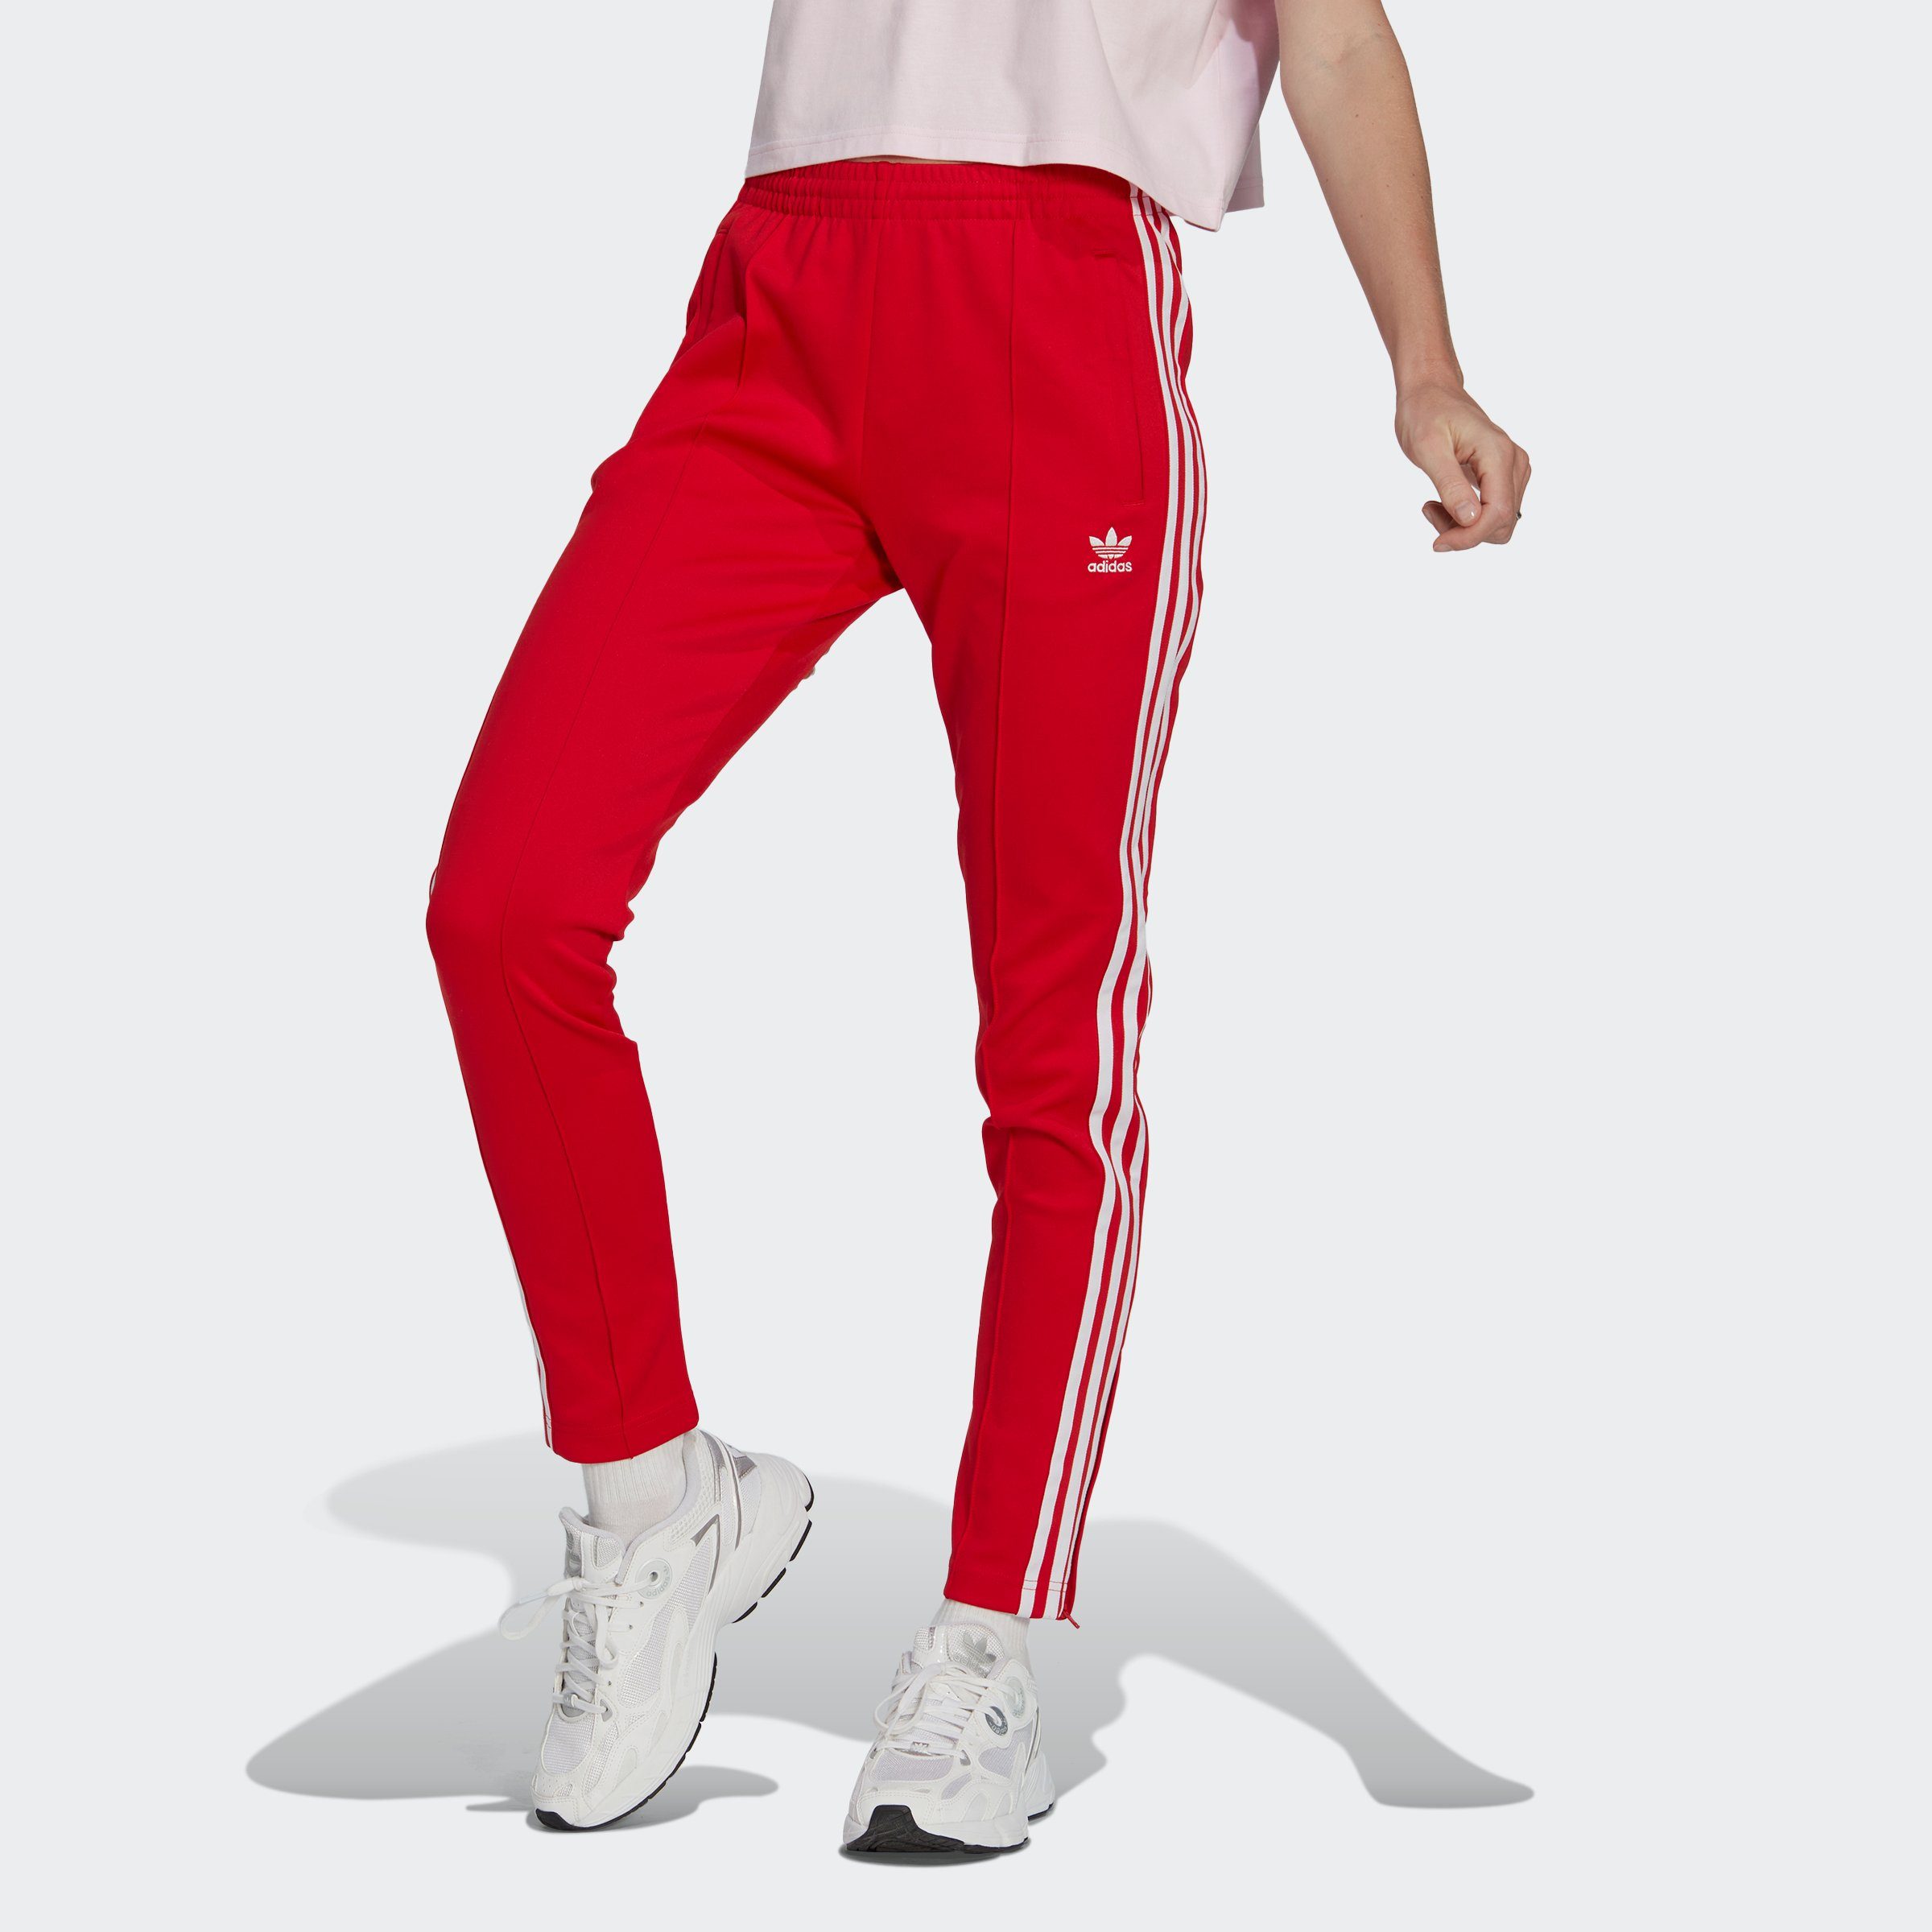 Adidas Originals Classic Jogginghose Damen Rot Lifestyle , 56% OFF